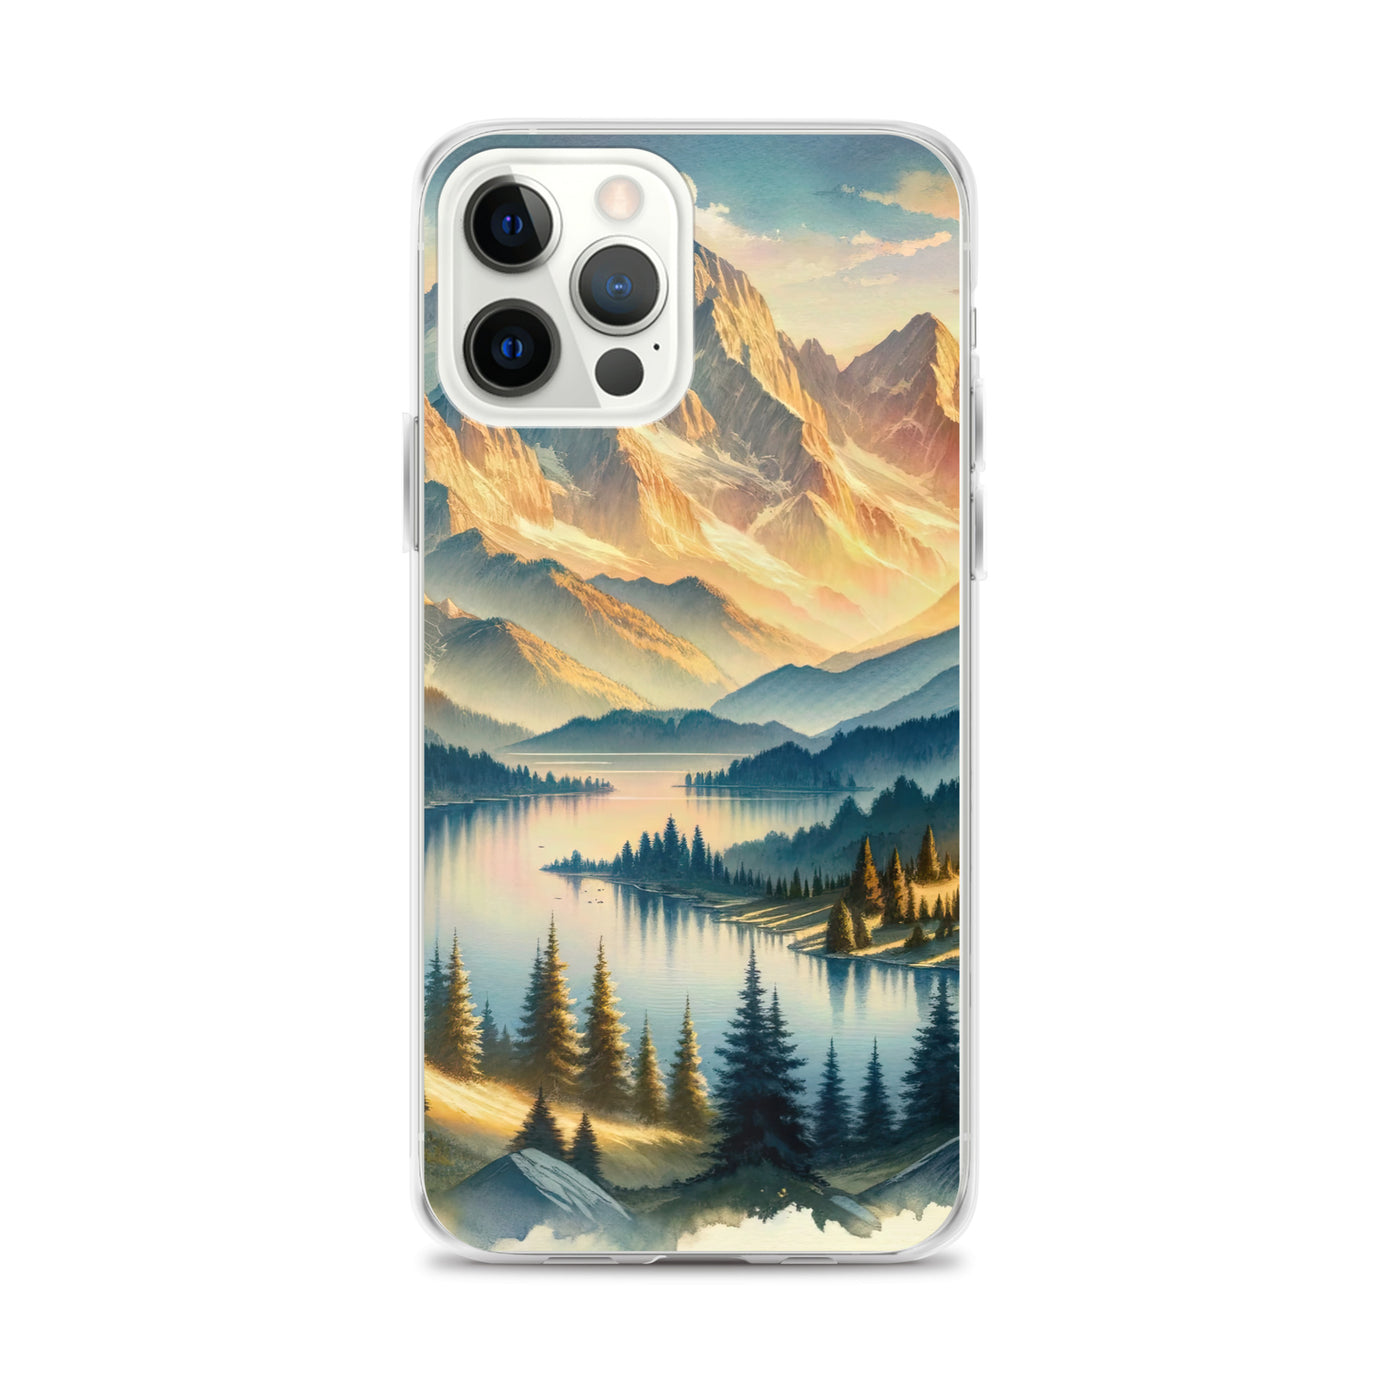 Aquarell der Alpenpracht bei Sonnenuntergang, Berge im goldenen Licht - iPhone Schutzhülle (durchsichtig) berge xxx yyy zzz iPhone 12 Pro Max